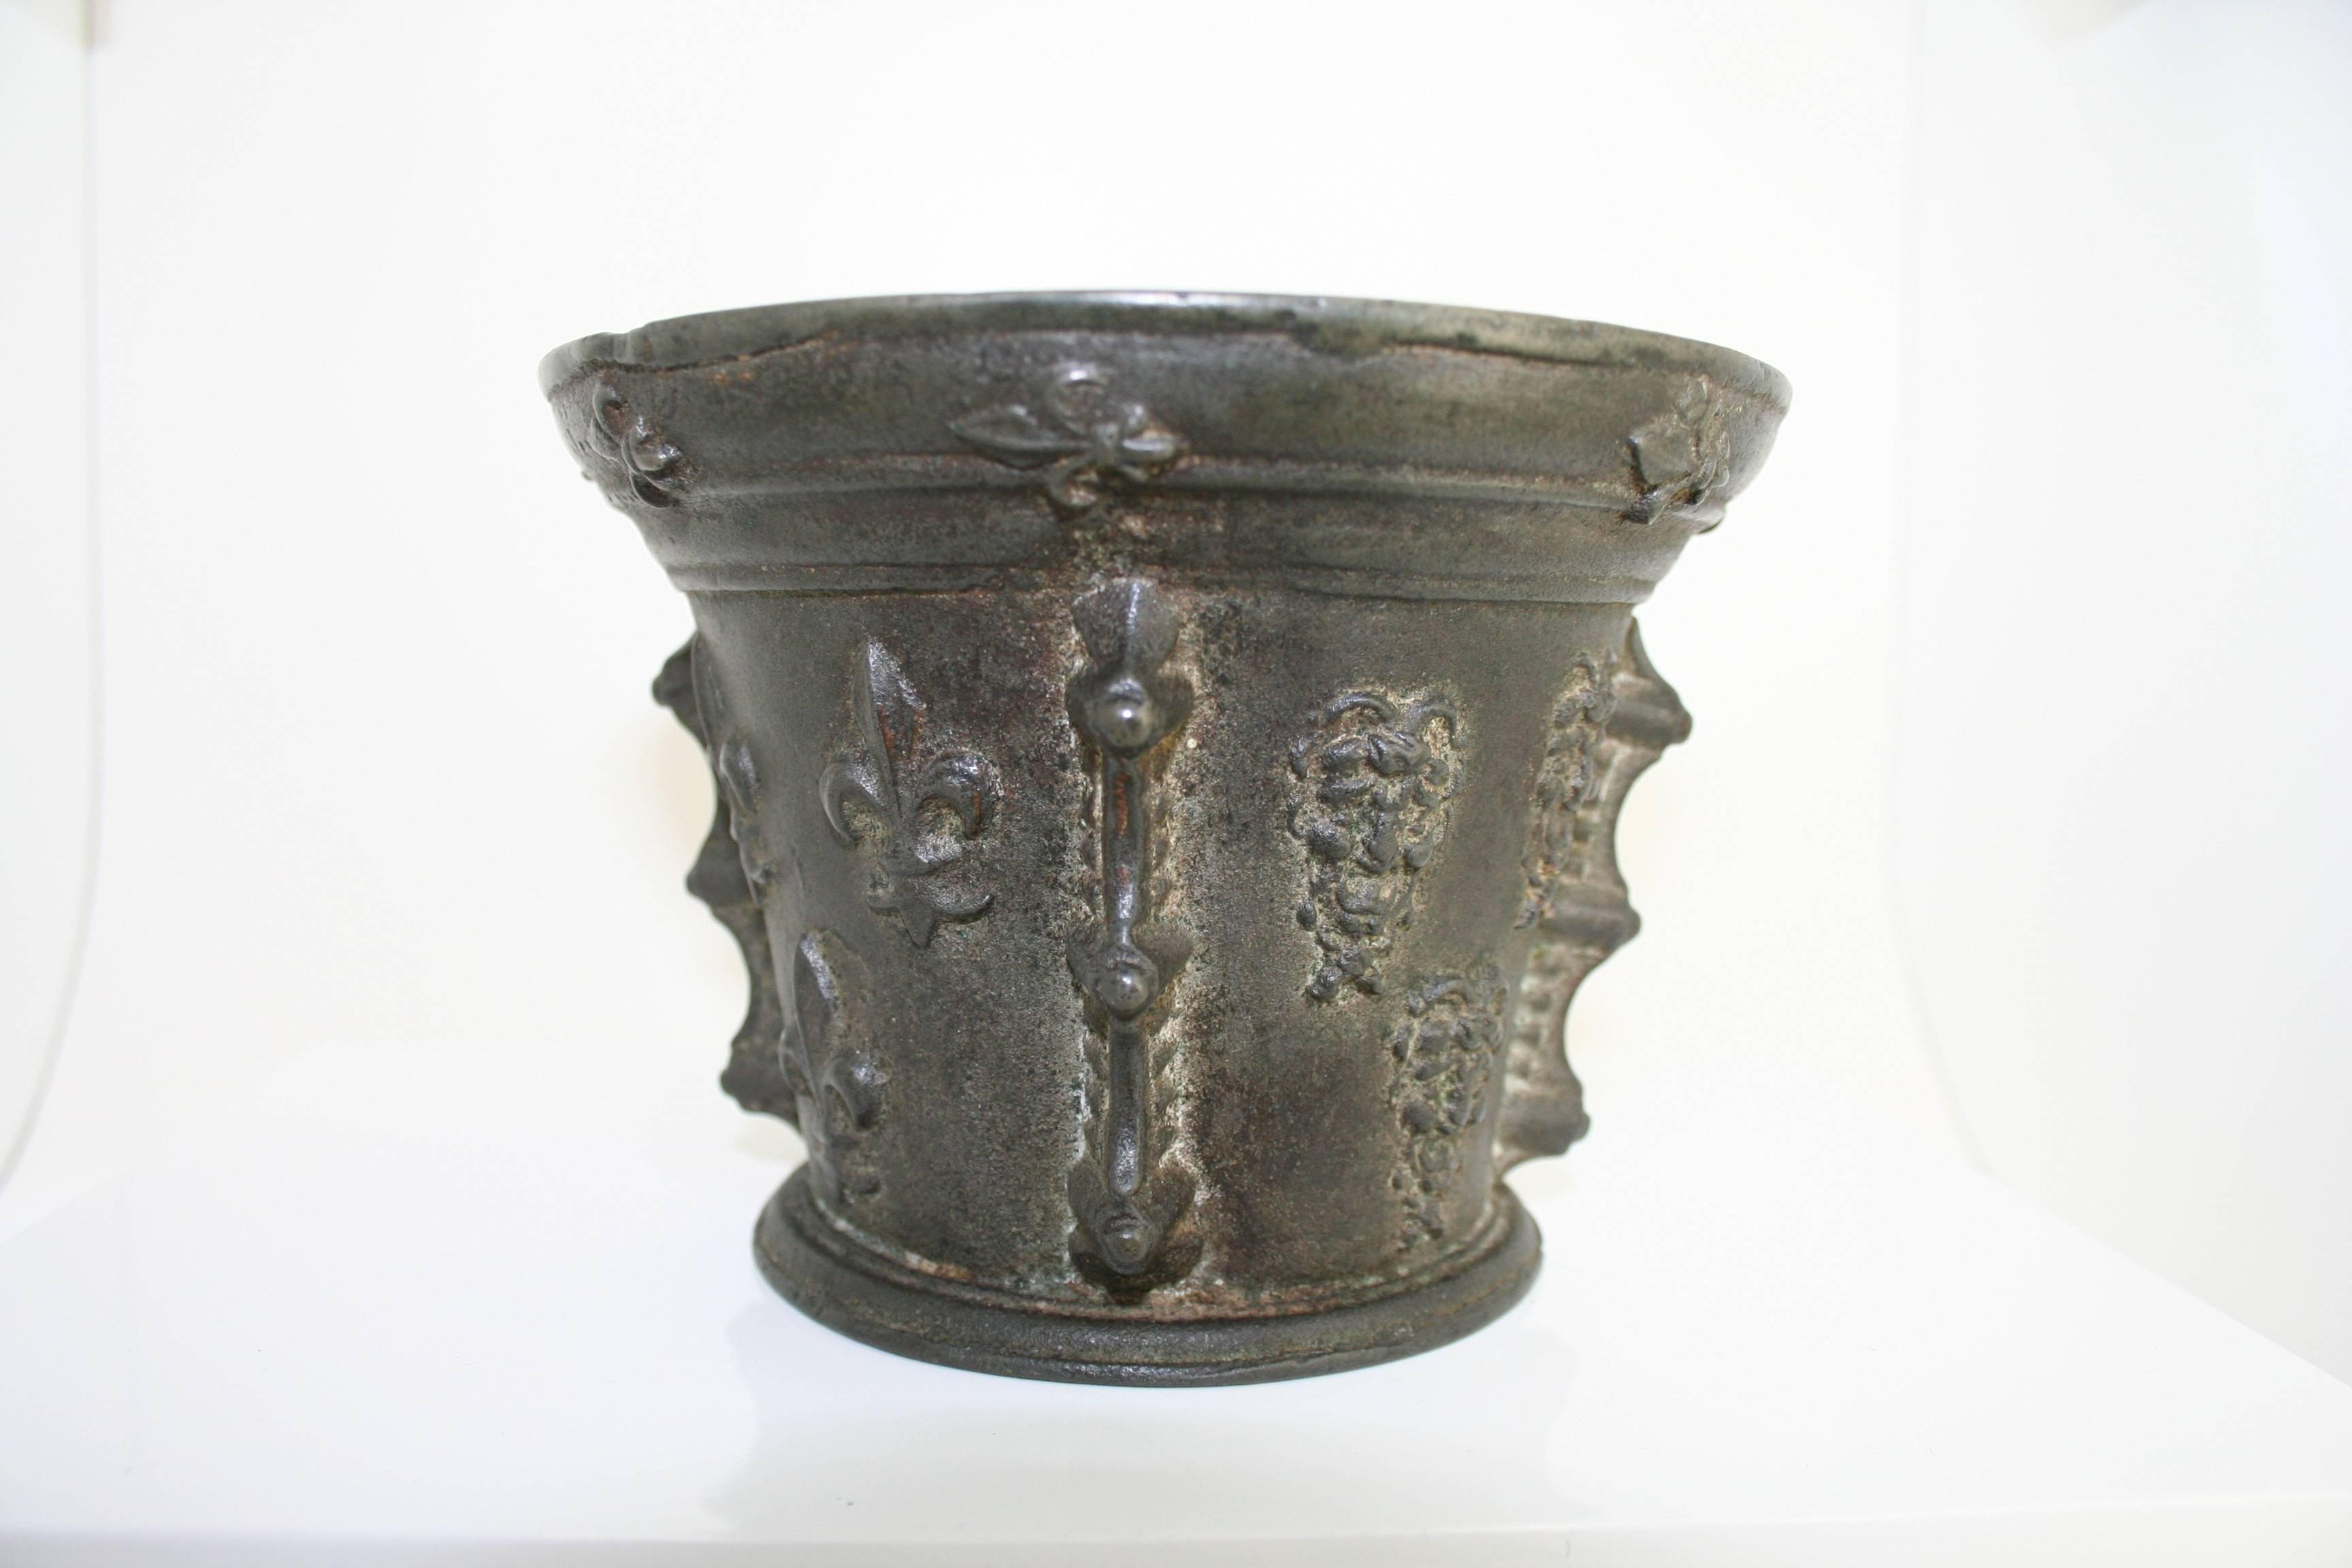 17th century bronze mortar